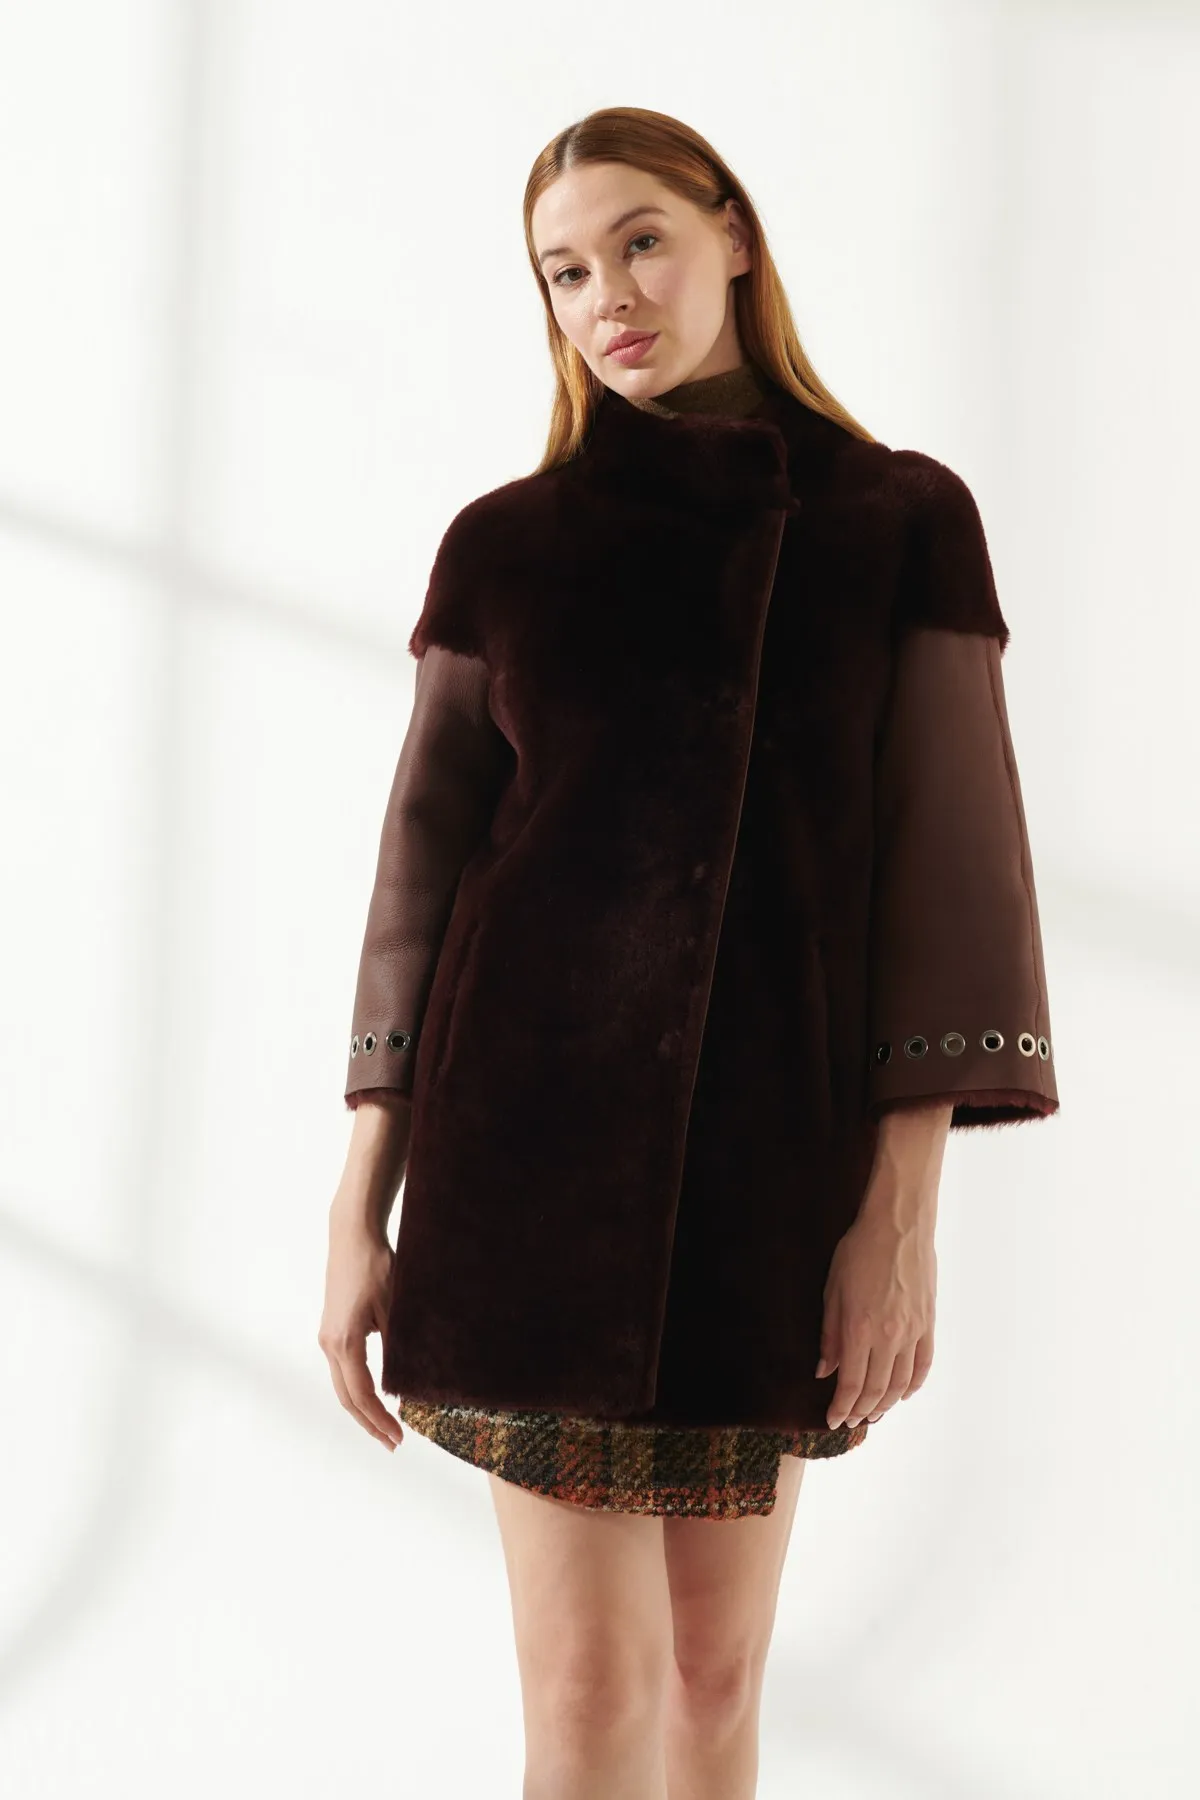 Women's Fur Leather Jacket Winter Warm Coat Design Clothing Products Classic Plush Coat Turkiyede Produced Long Parka Fashion